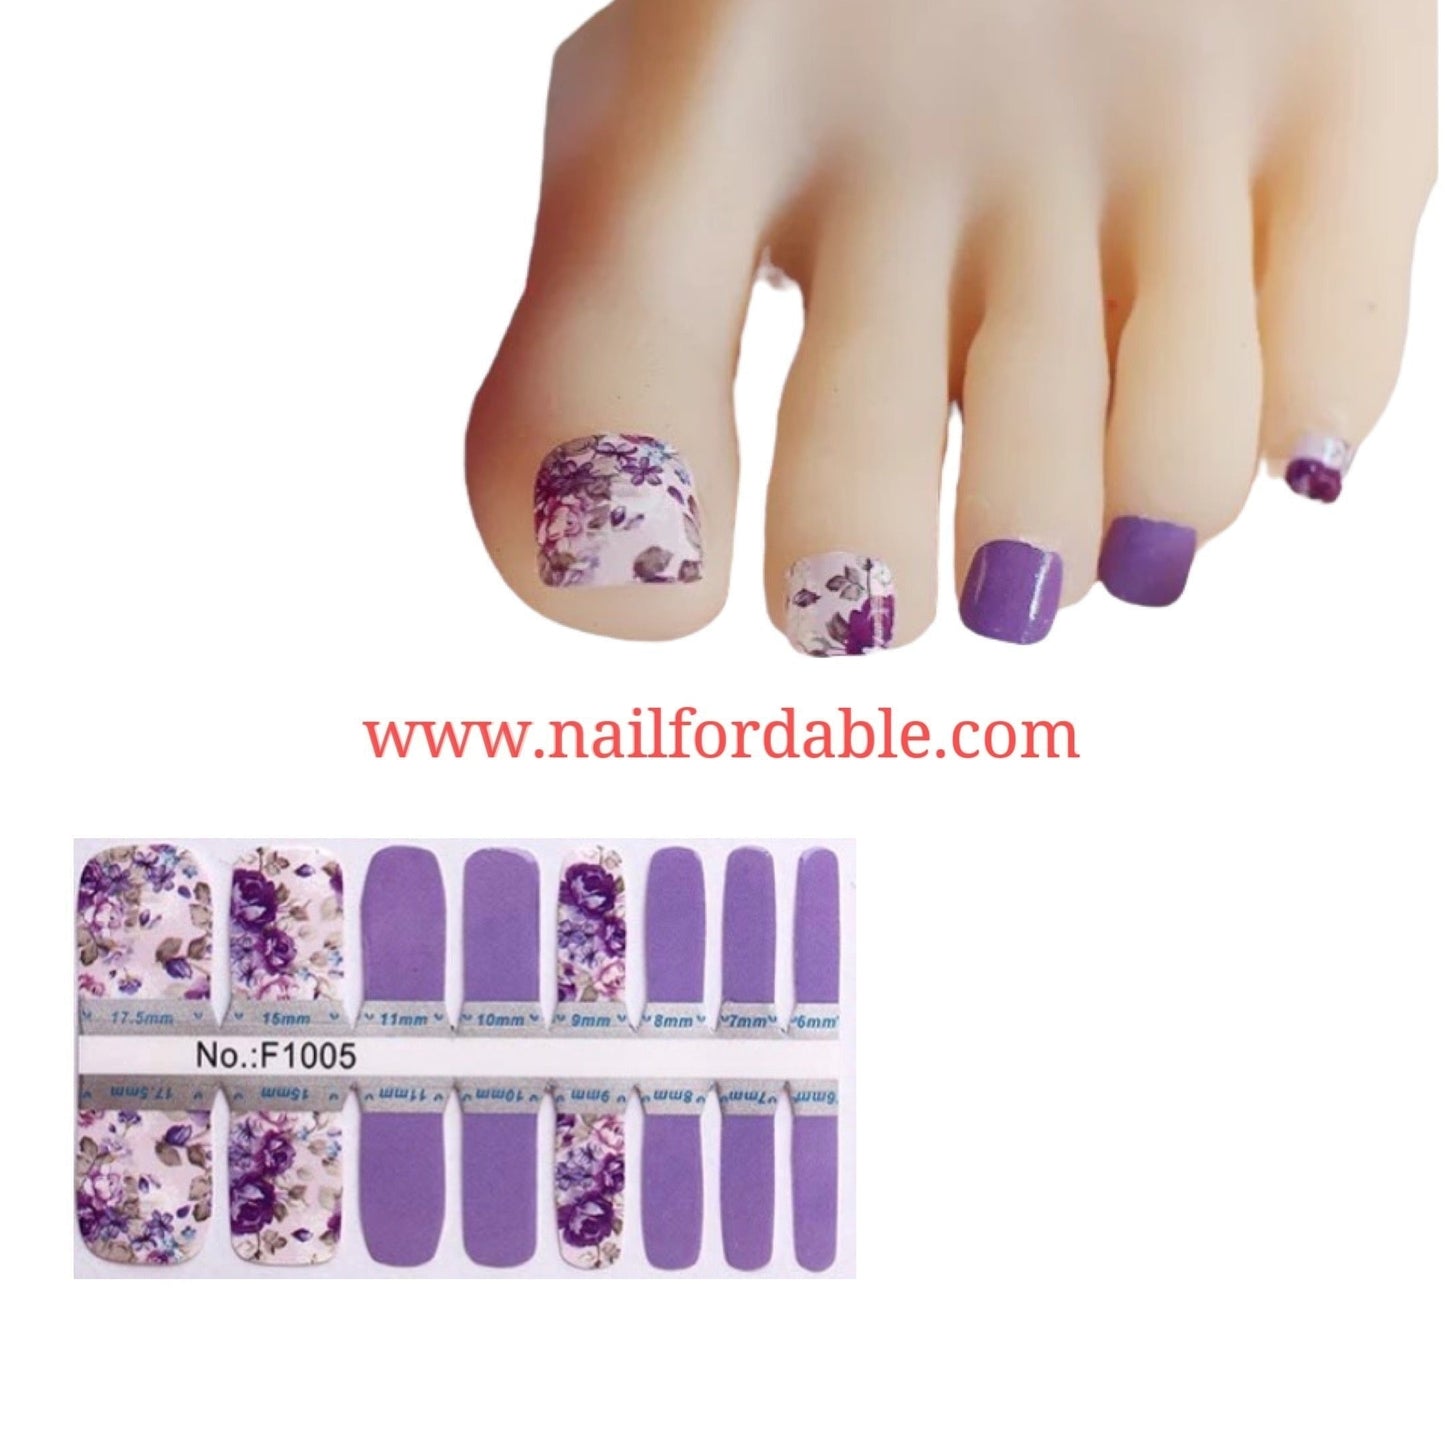 Lilac flowers Nail Wraps | Semi Cured Gel Wraps | Gel Nail Wraps |Nail Polish | Nail Stickers